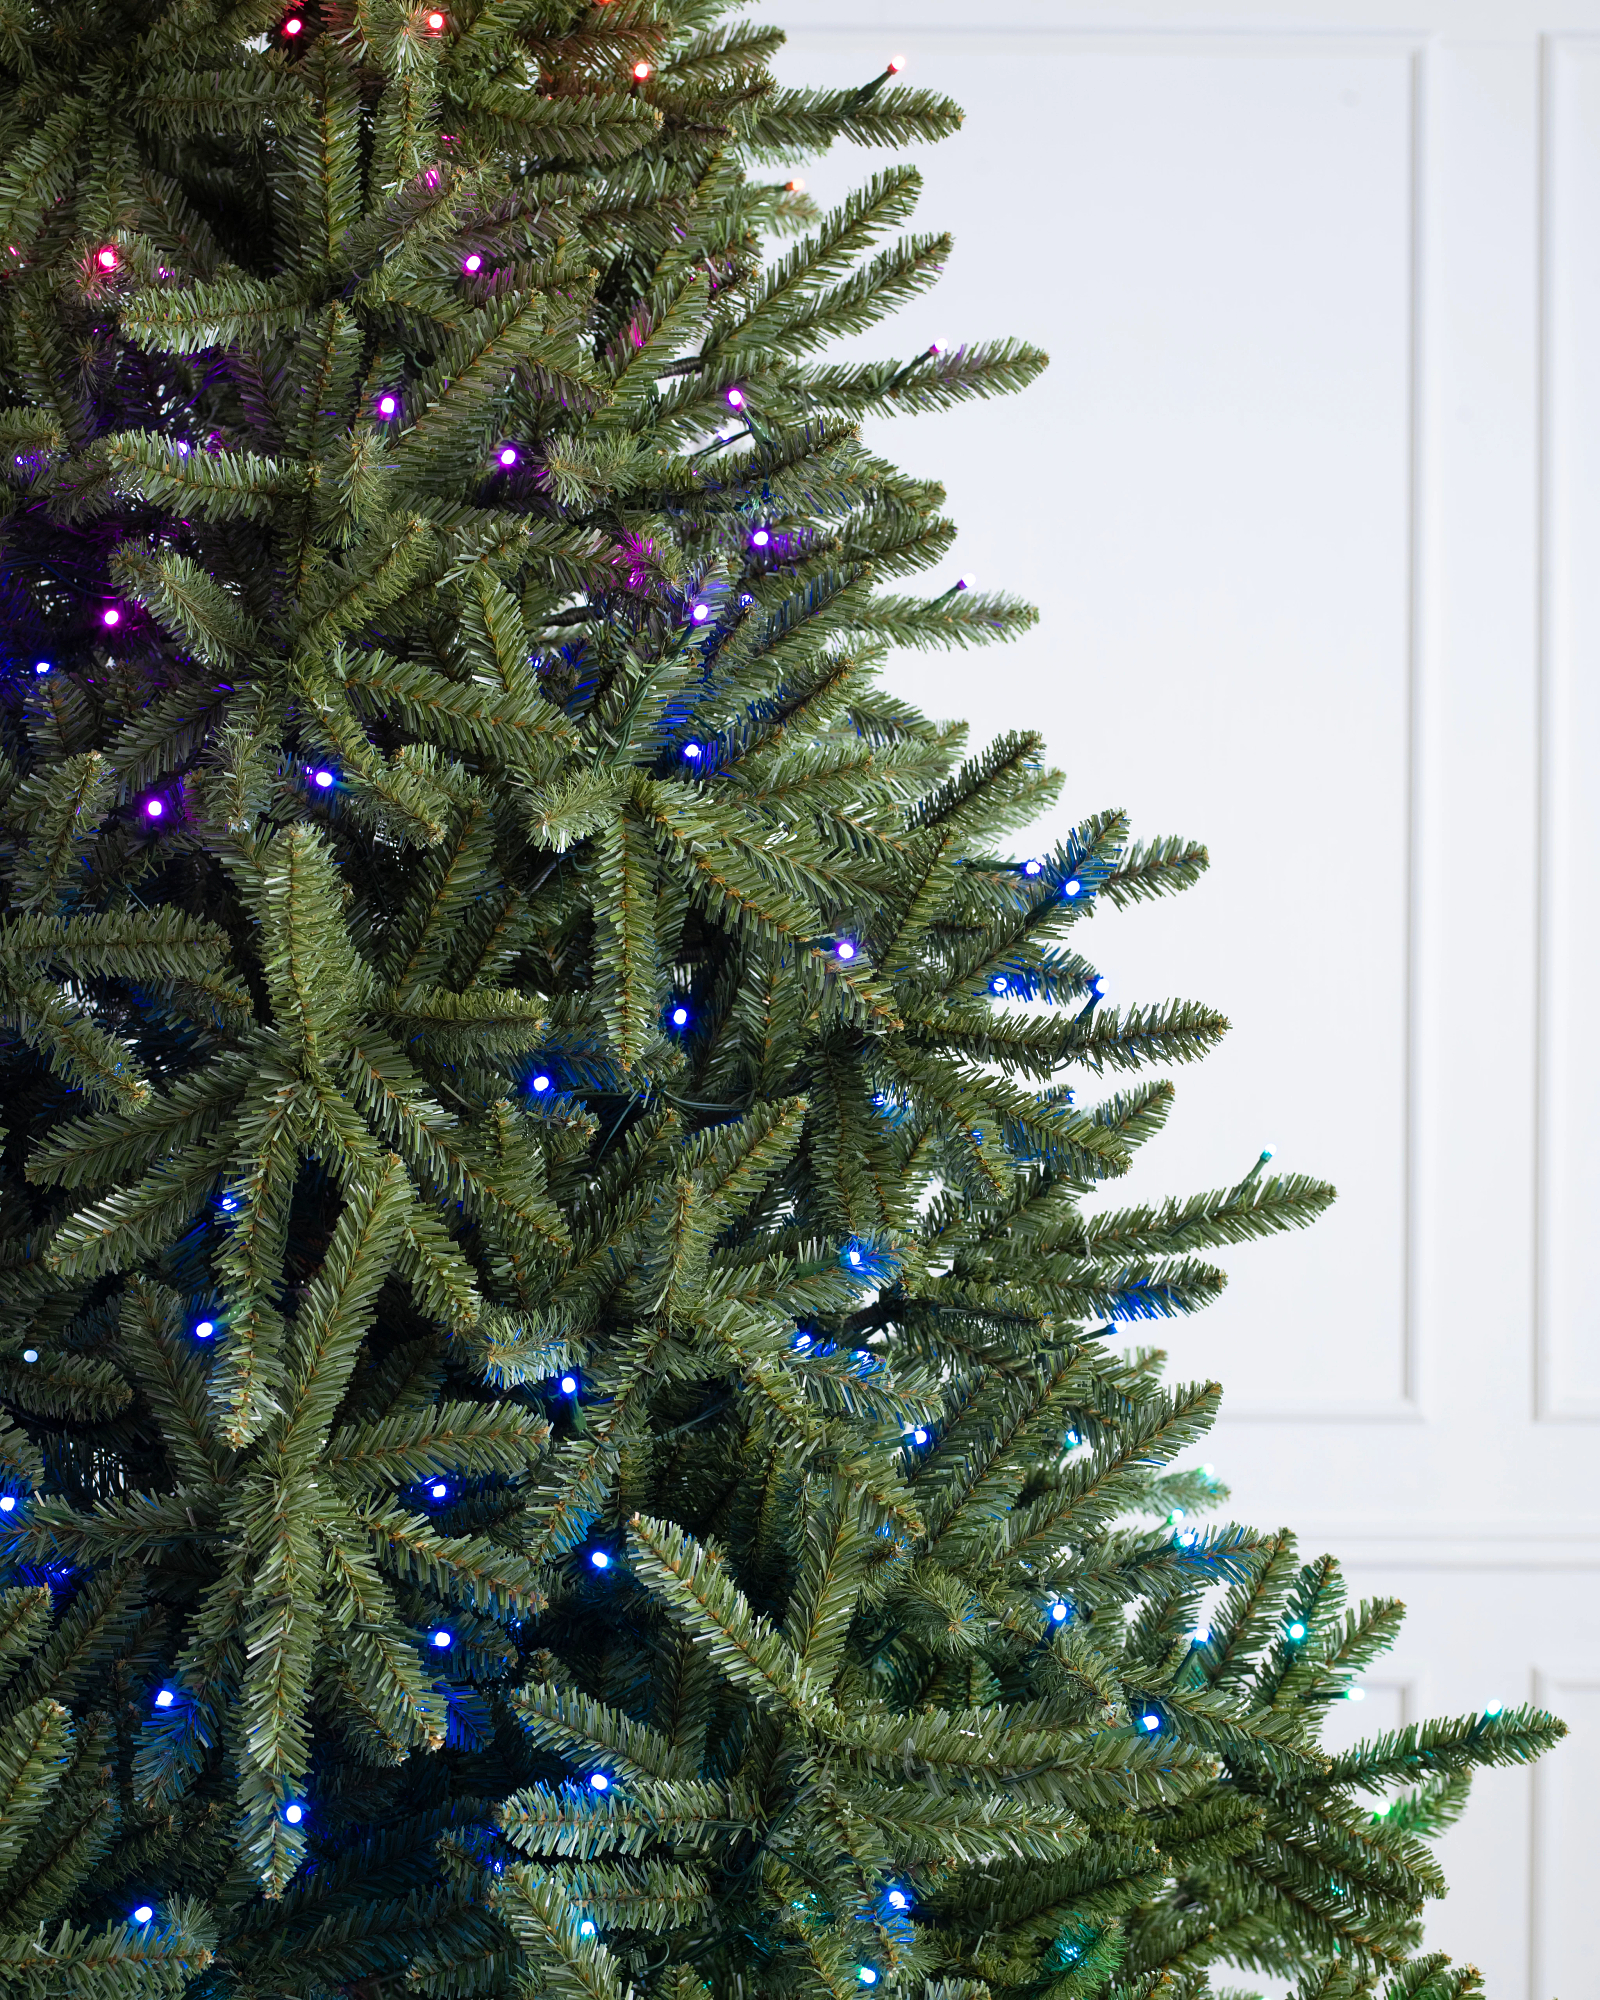 Philips Hue brings HomeKit control to your Christmas tree with its $29 smart  plug (Reg. $35)